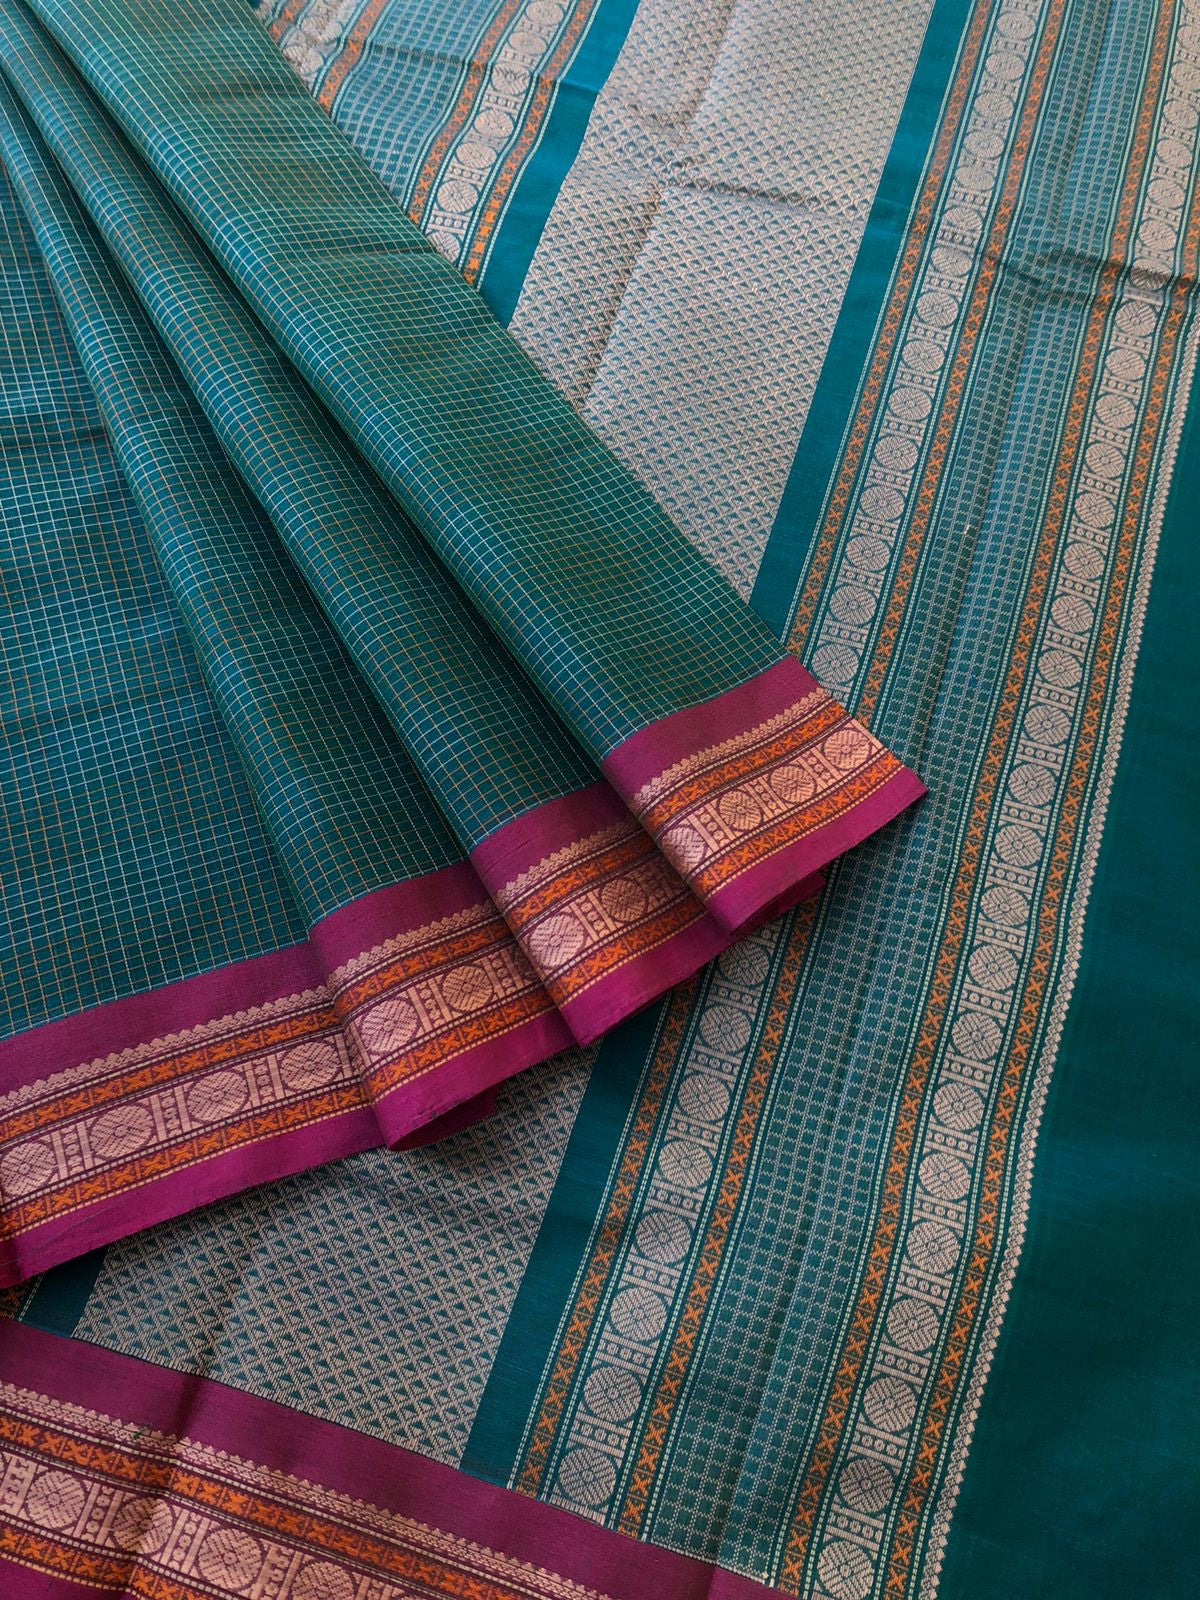 Mangalavastaram - teal blue interlocking woven chec with small woven borders